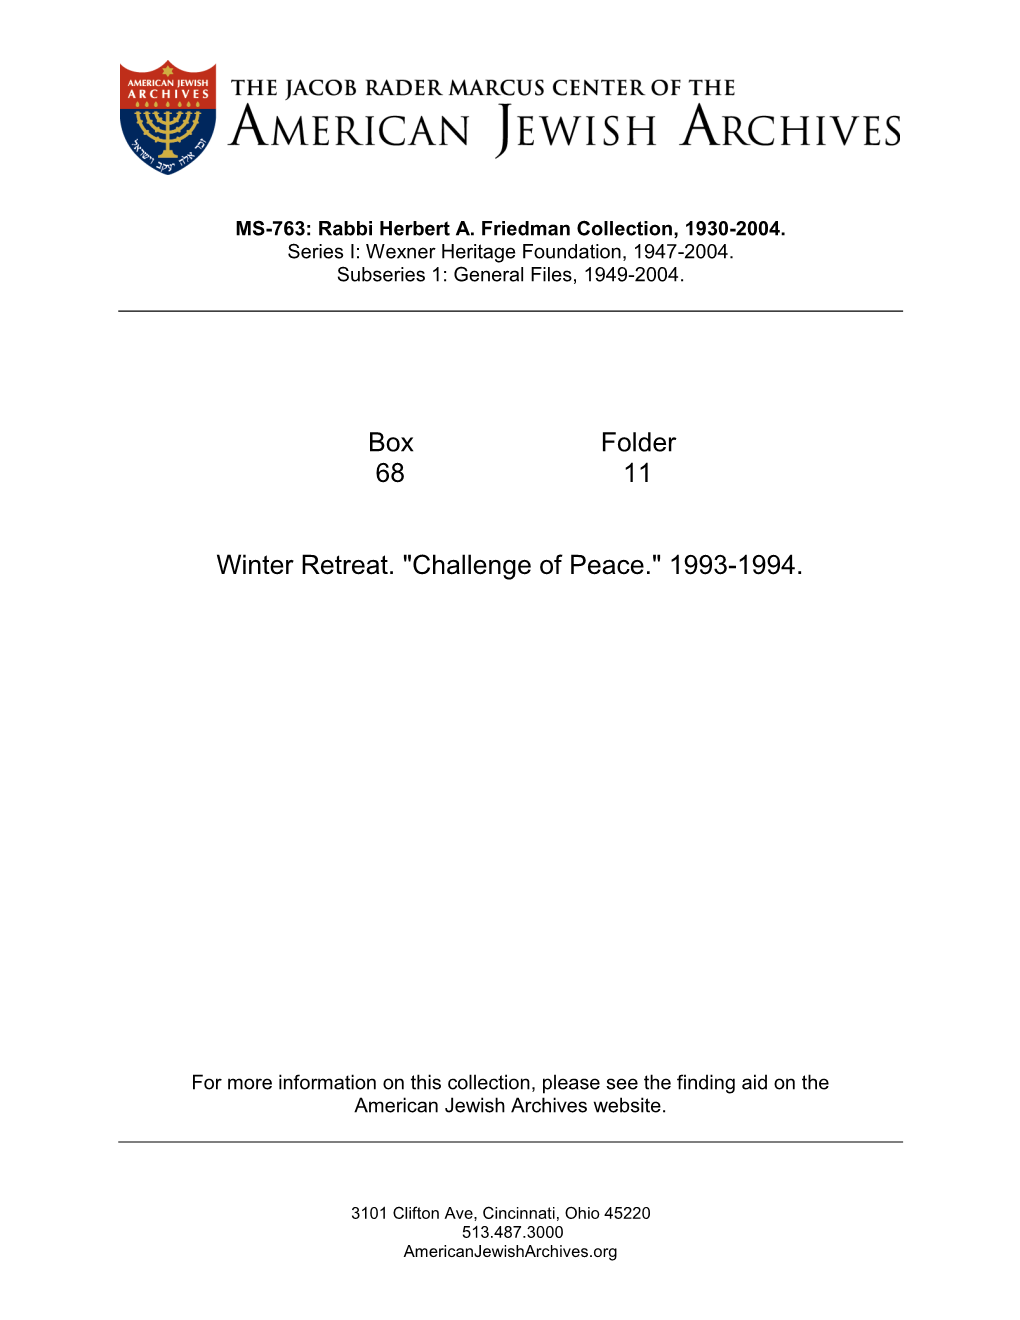 Box Folder 68 11 Winter Retreat. "Challenge of Peace."